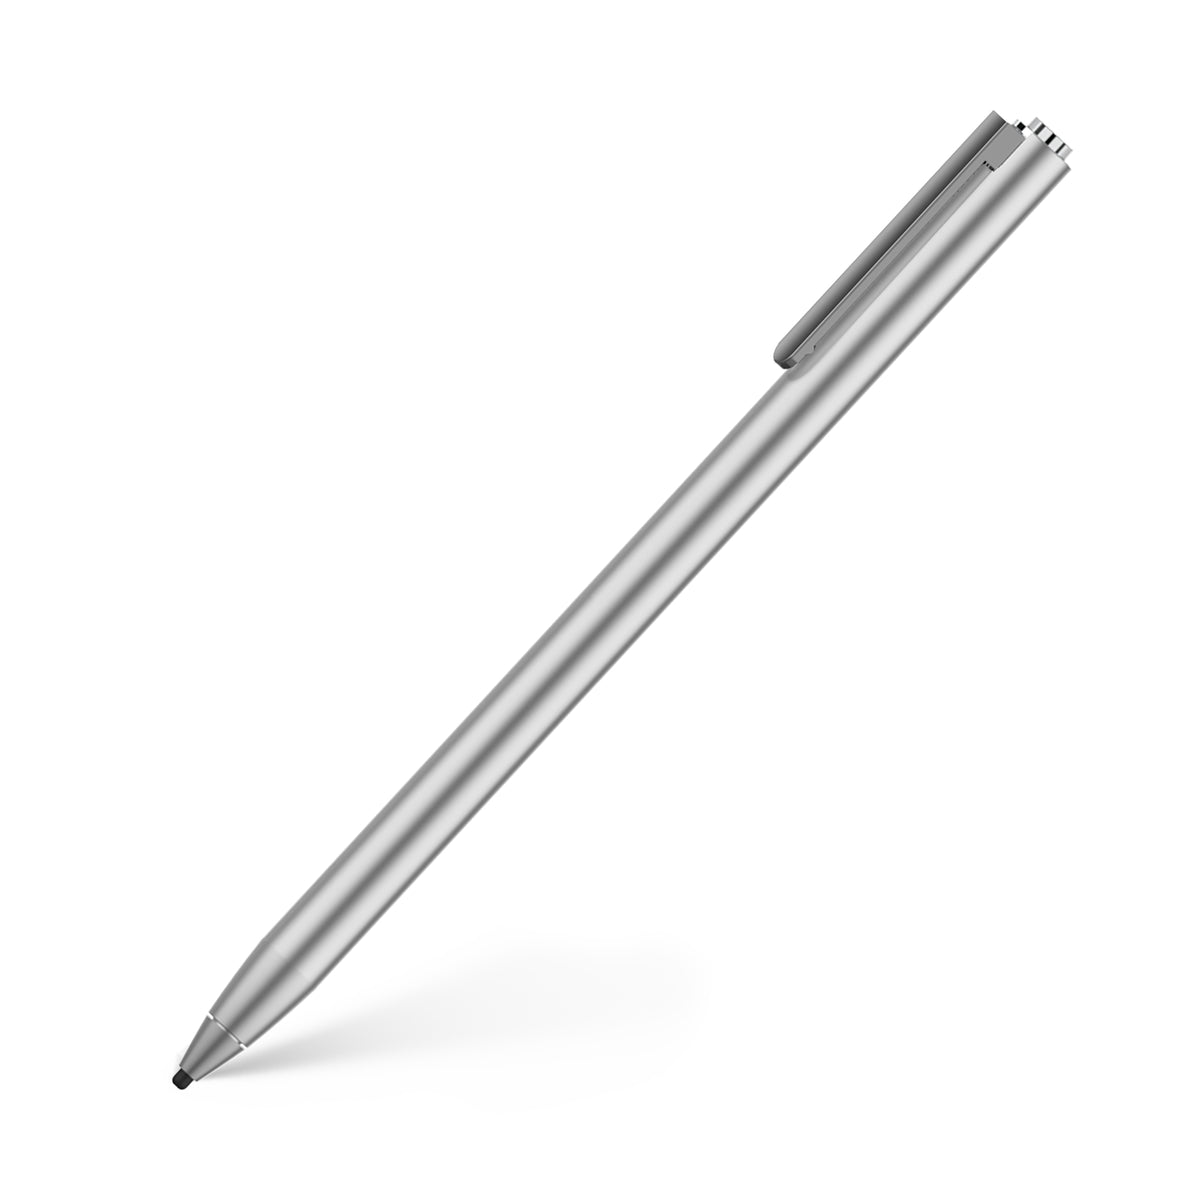 ADONIT Dash 4 True Universal Dual Stylus, Palm Rejection Pencil - Silver